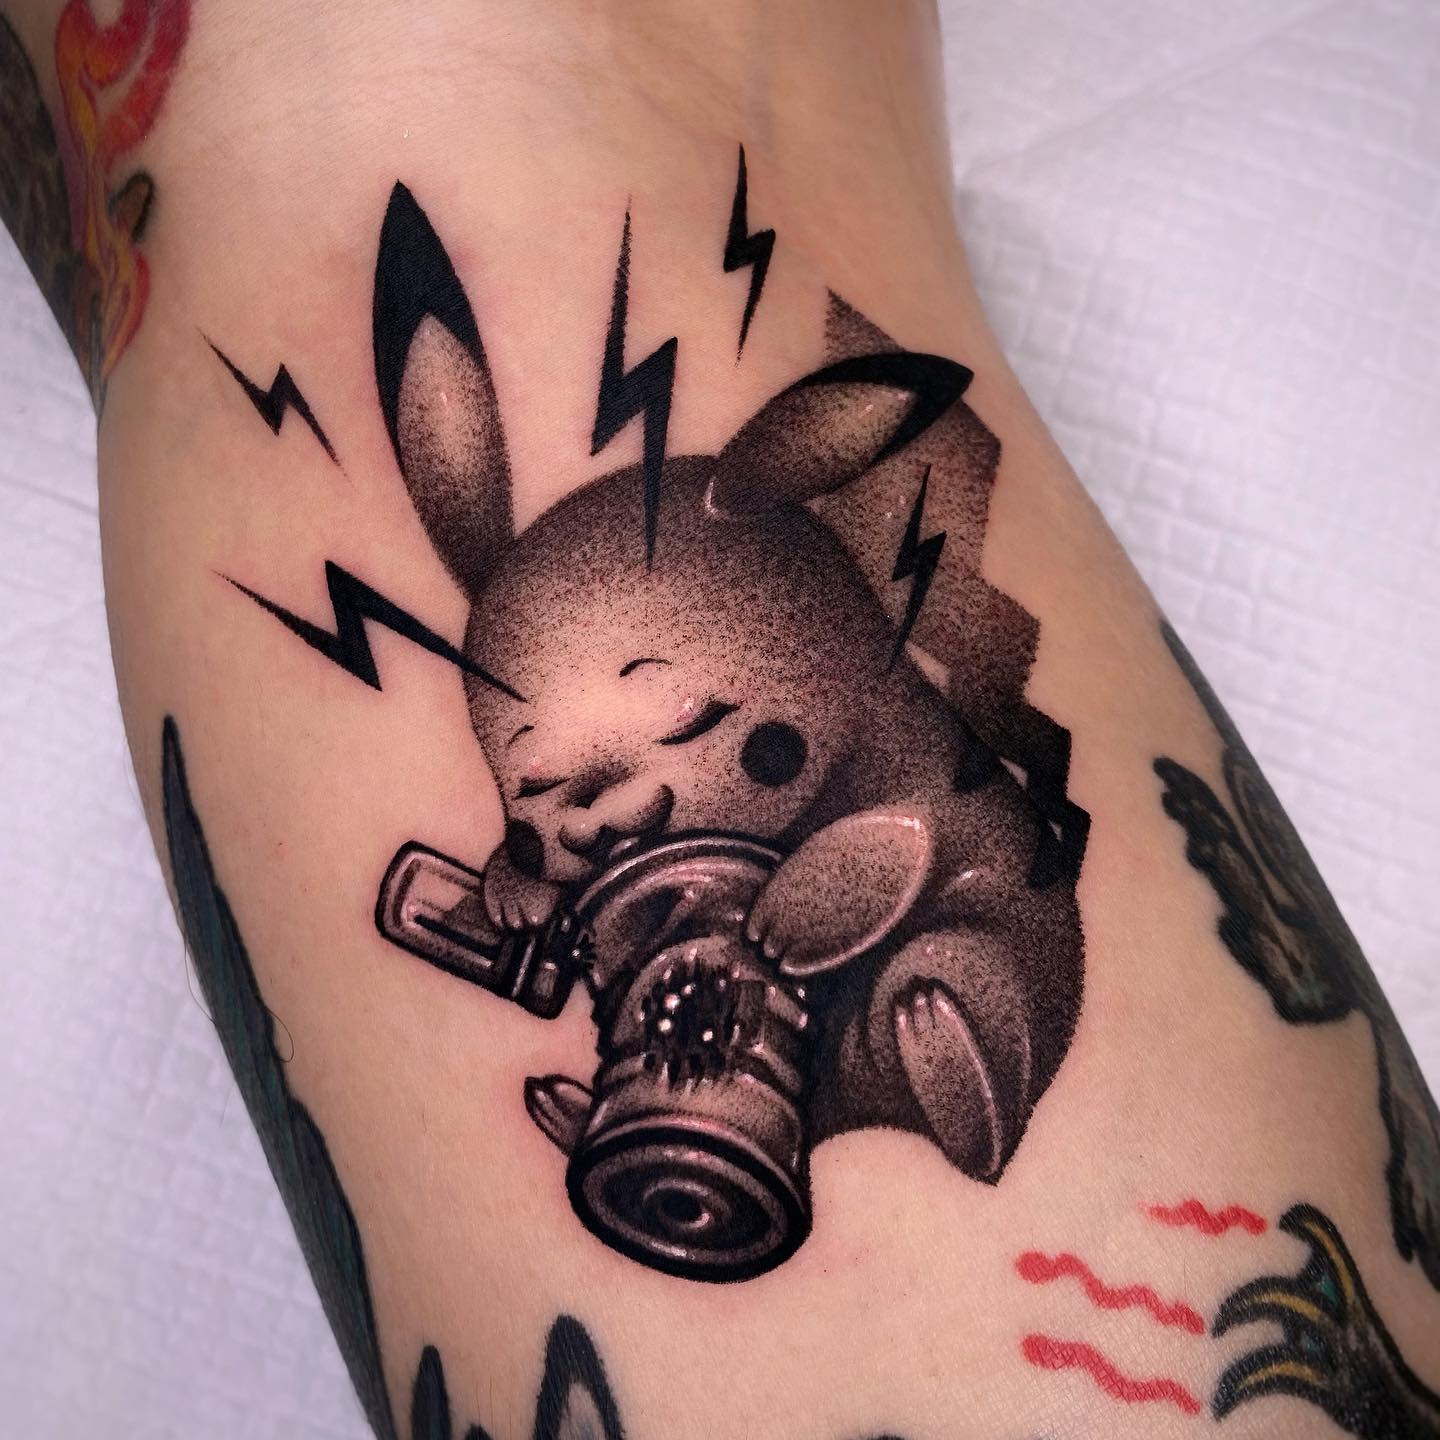 Realistic pikachu tattoo by inkkim.kim